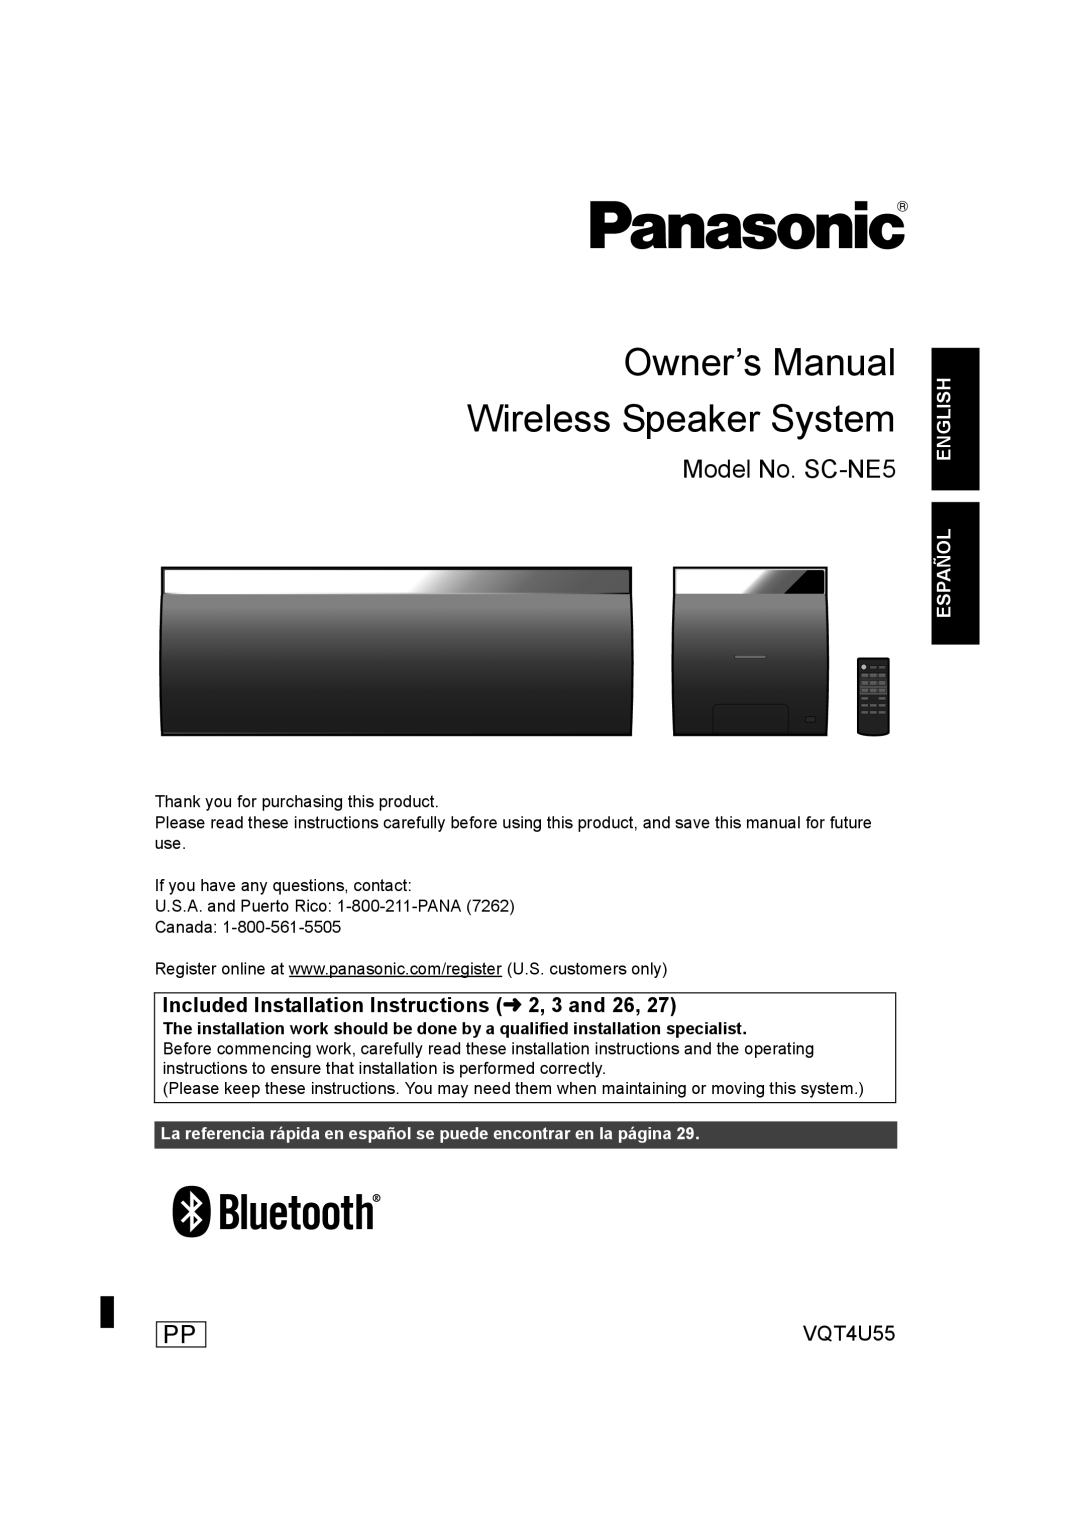 Panasonic installation instructions Operating Instructions, Wireless Speaker System, Model No. / 型号 SC-NE5, VQT4X66 